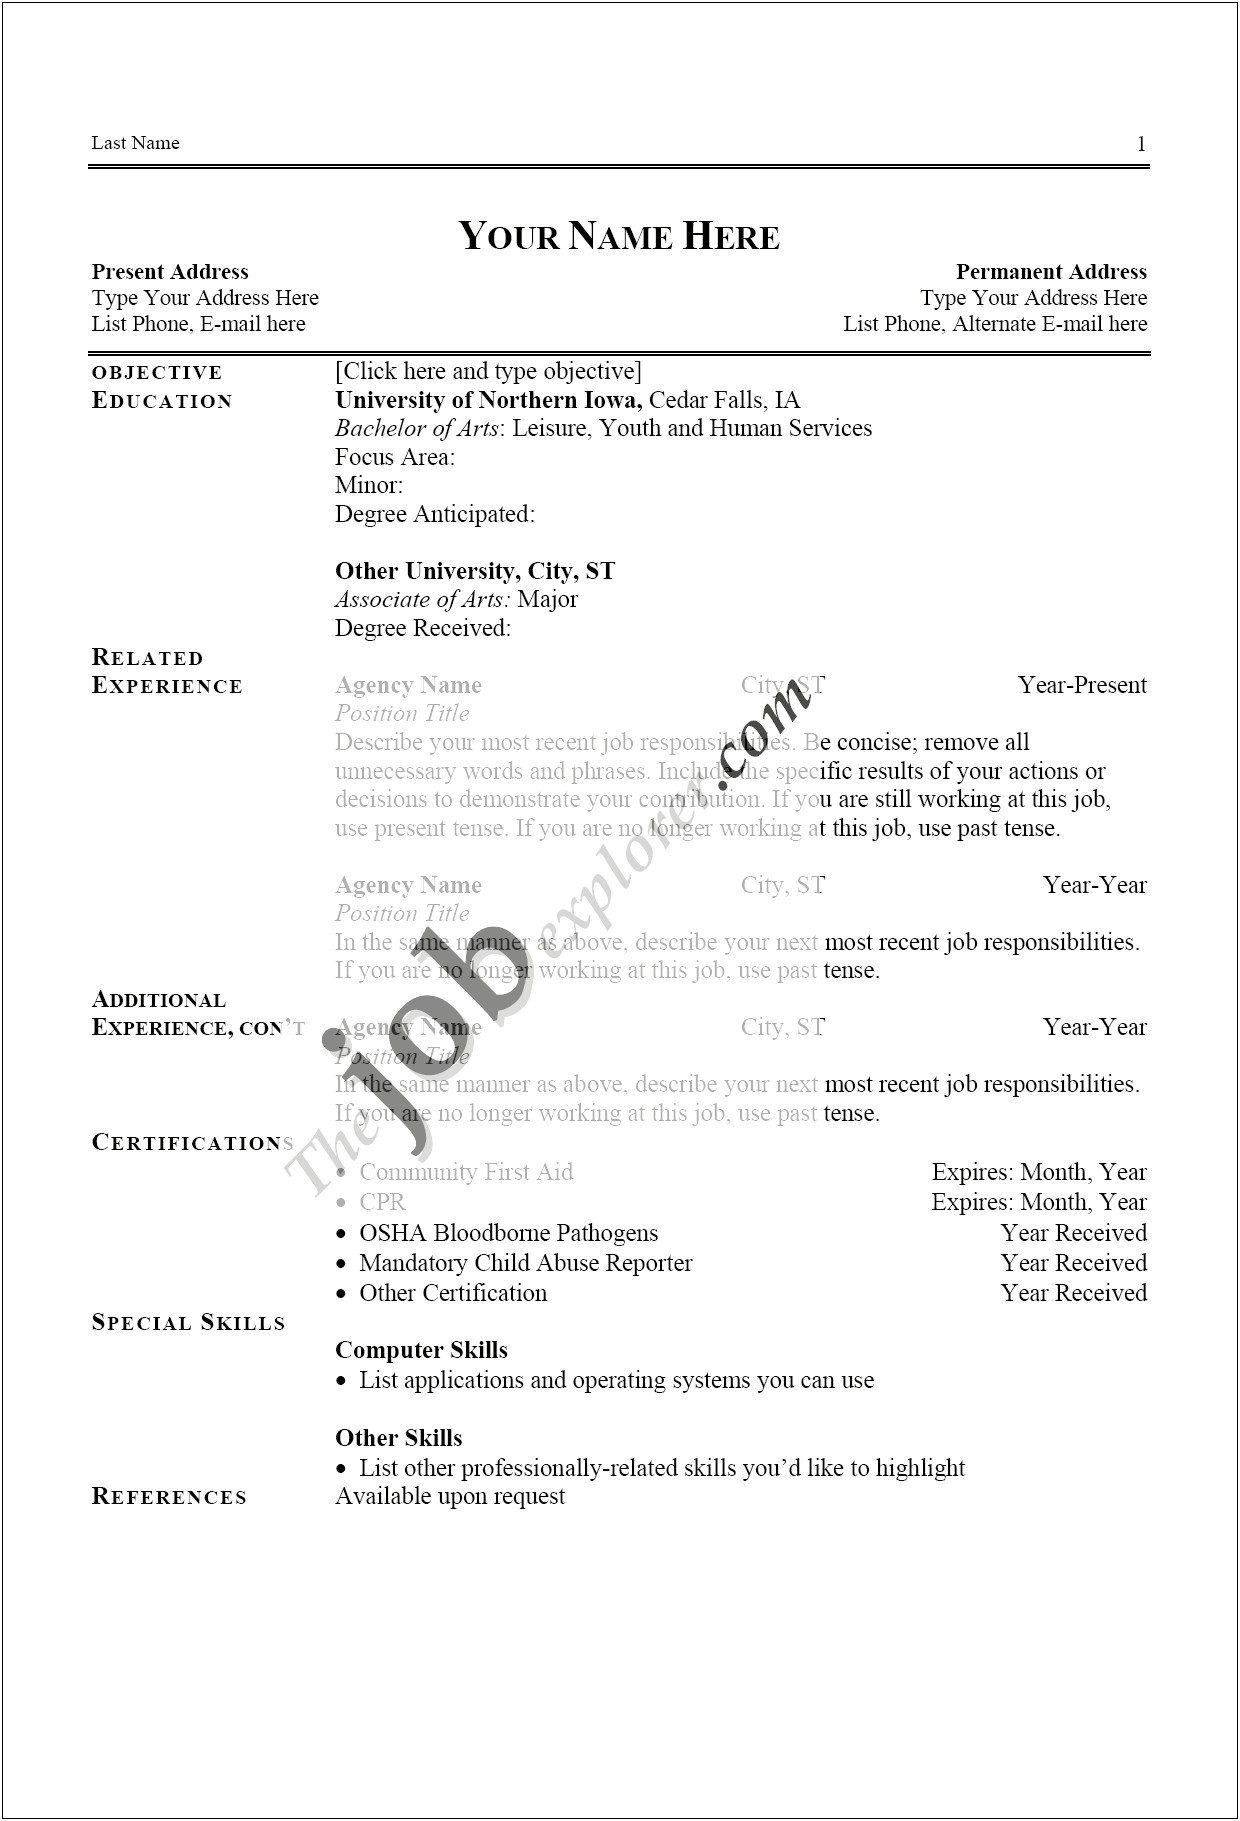 Resume List Most Recent Job